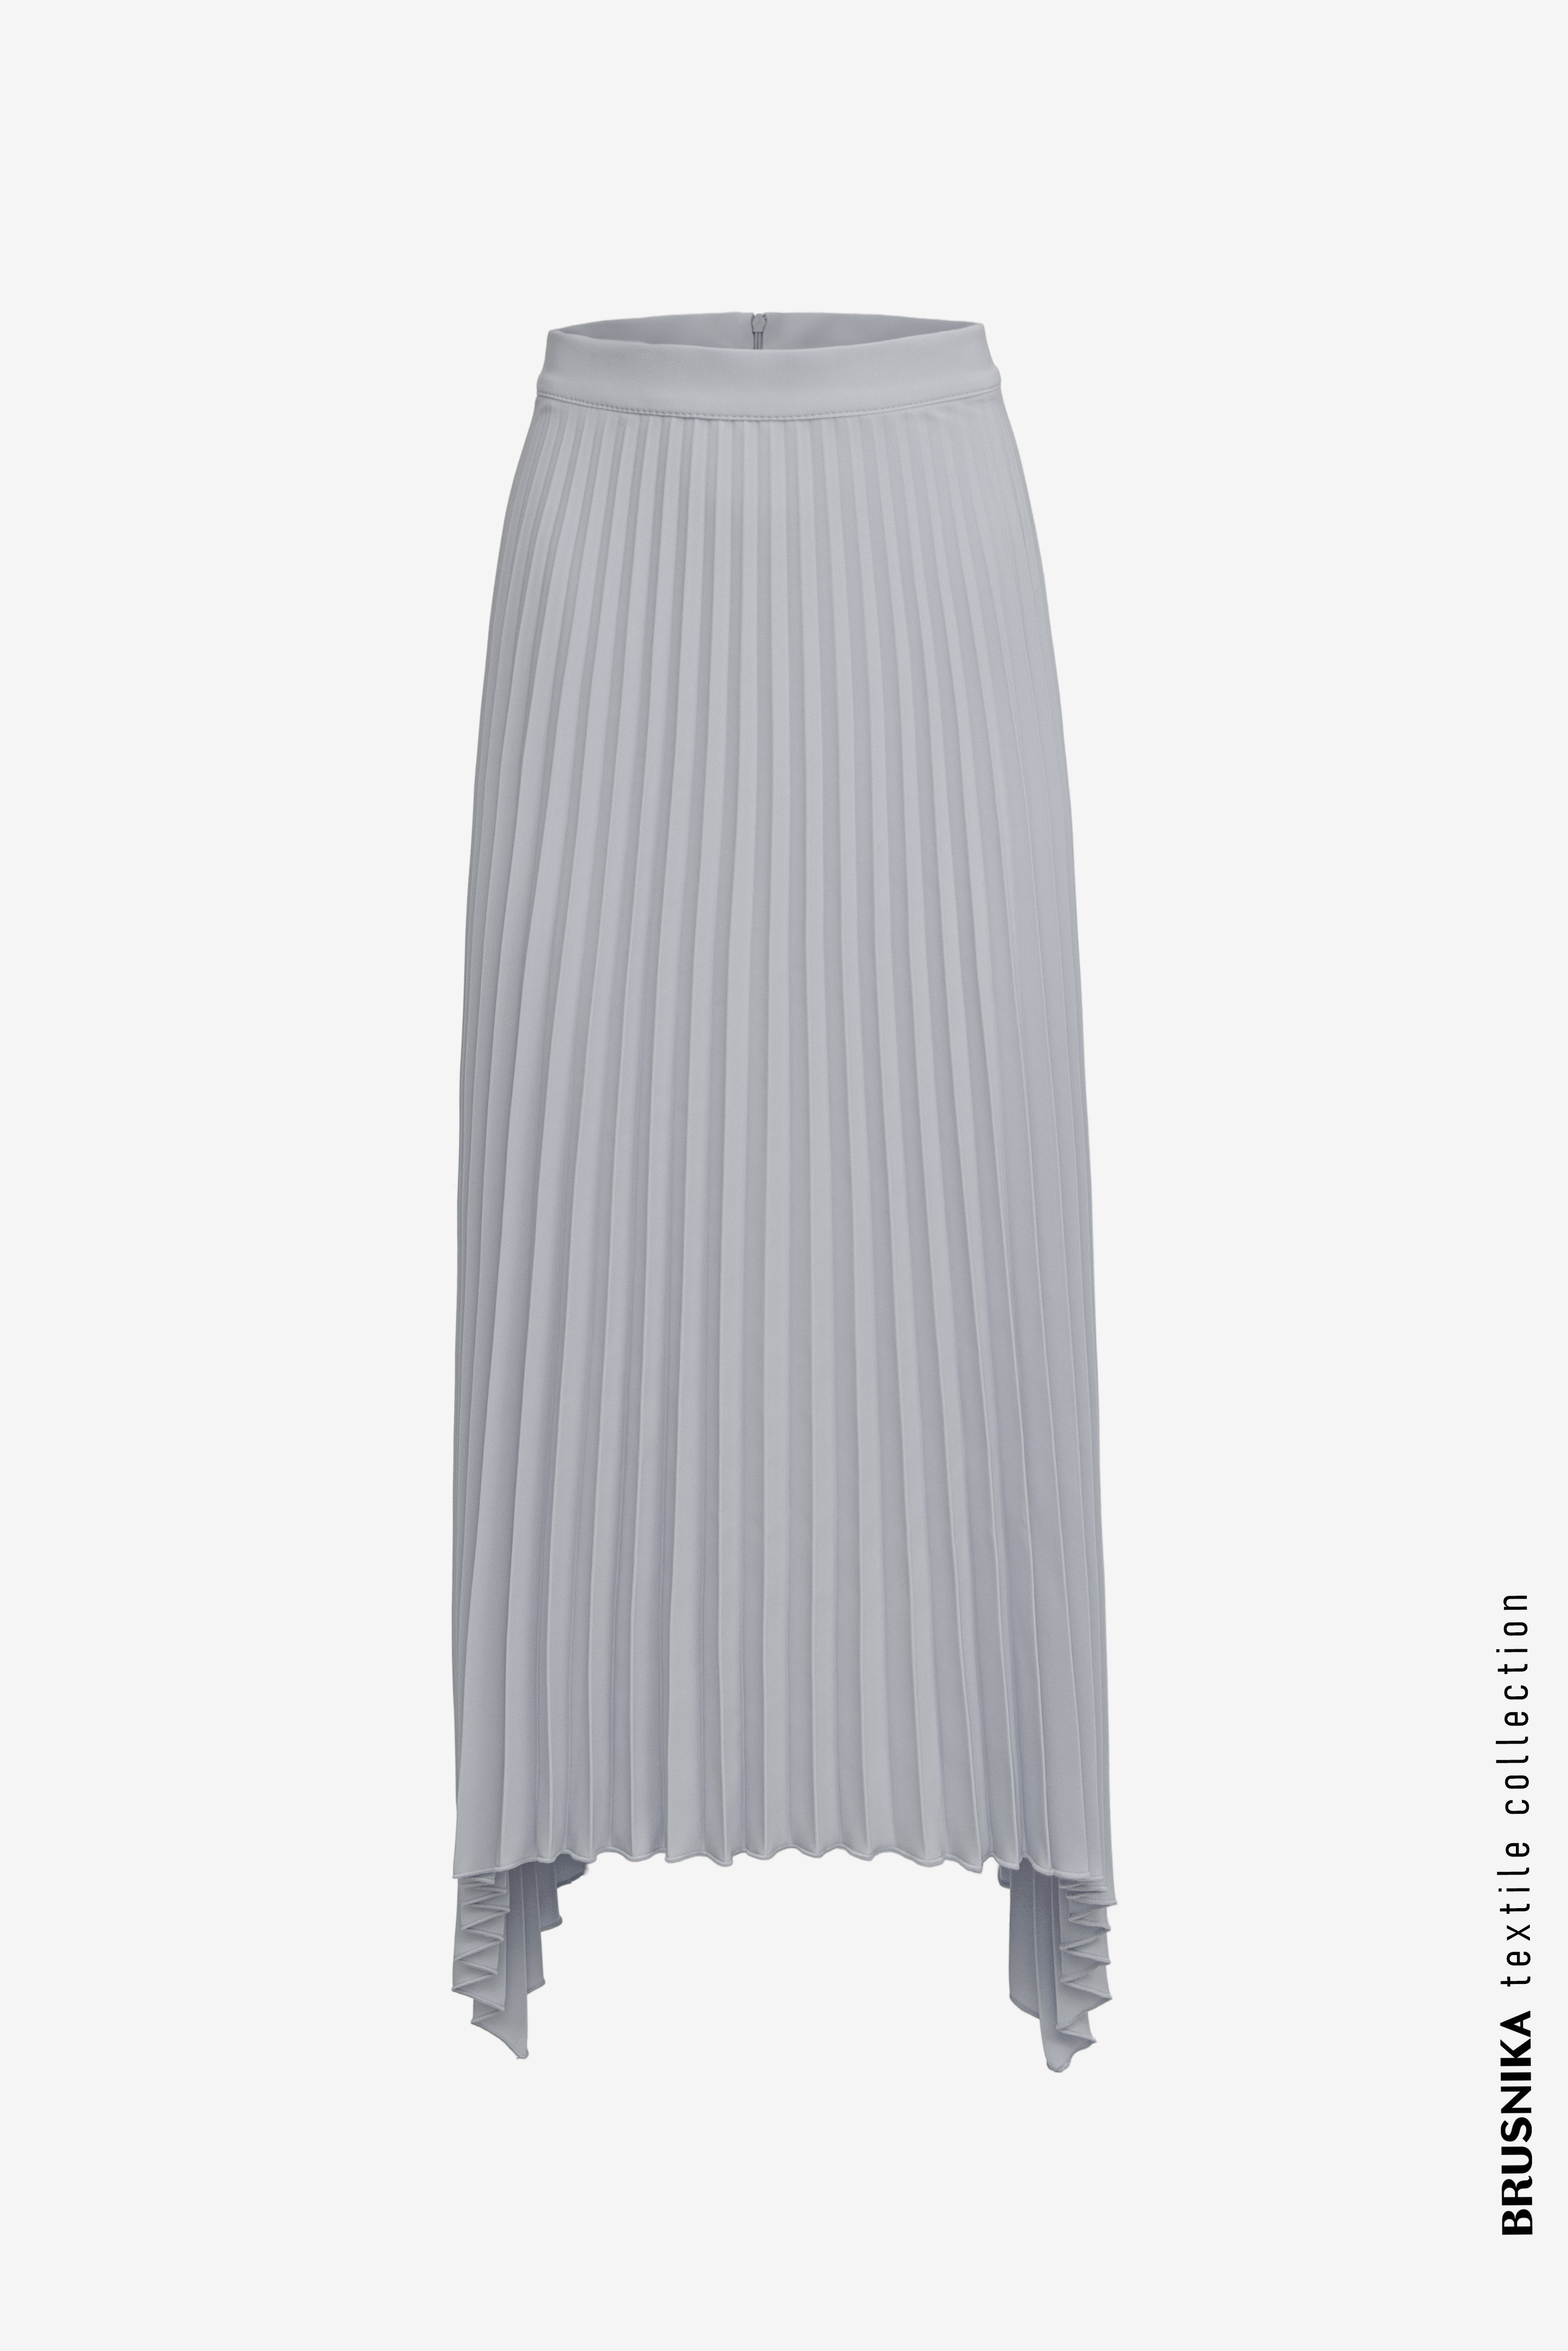 Skirt 4286-04 Grey from BRUSNiKA